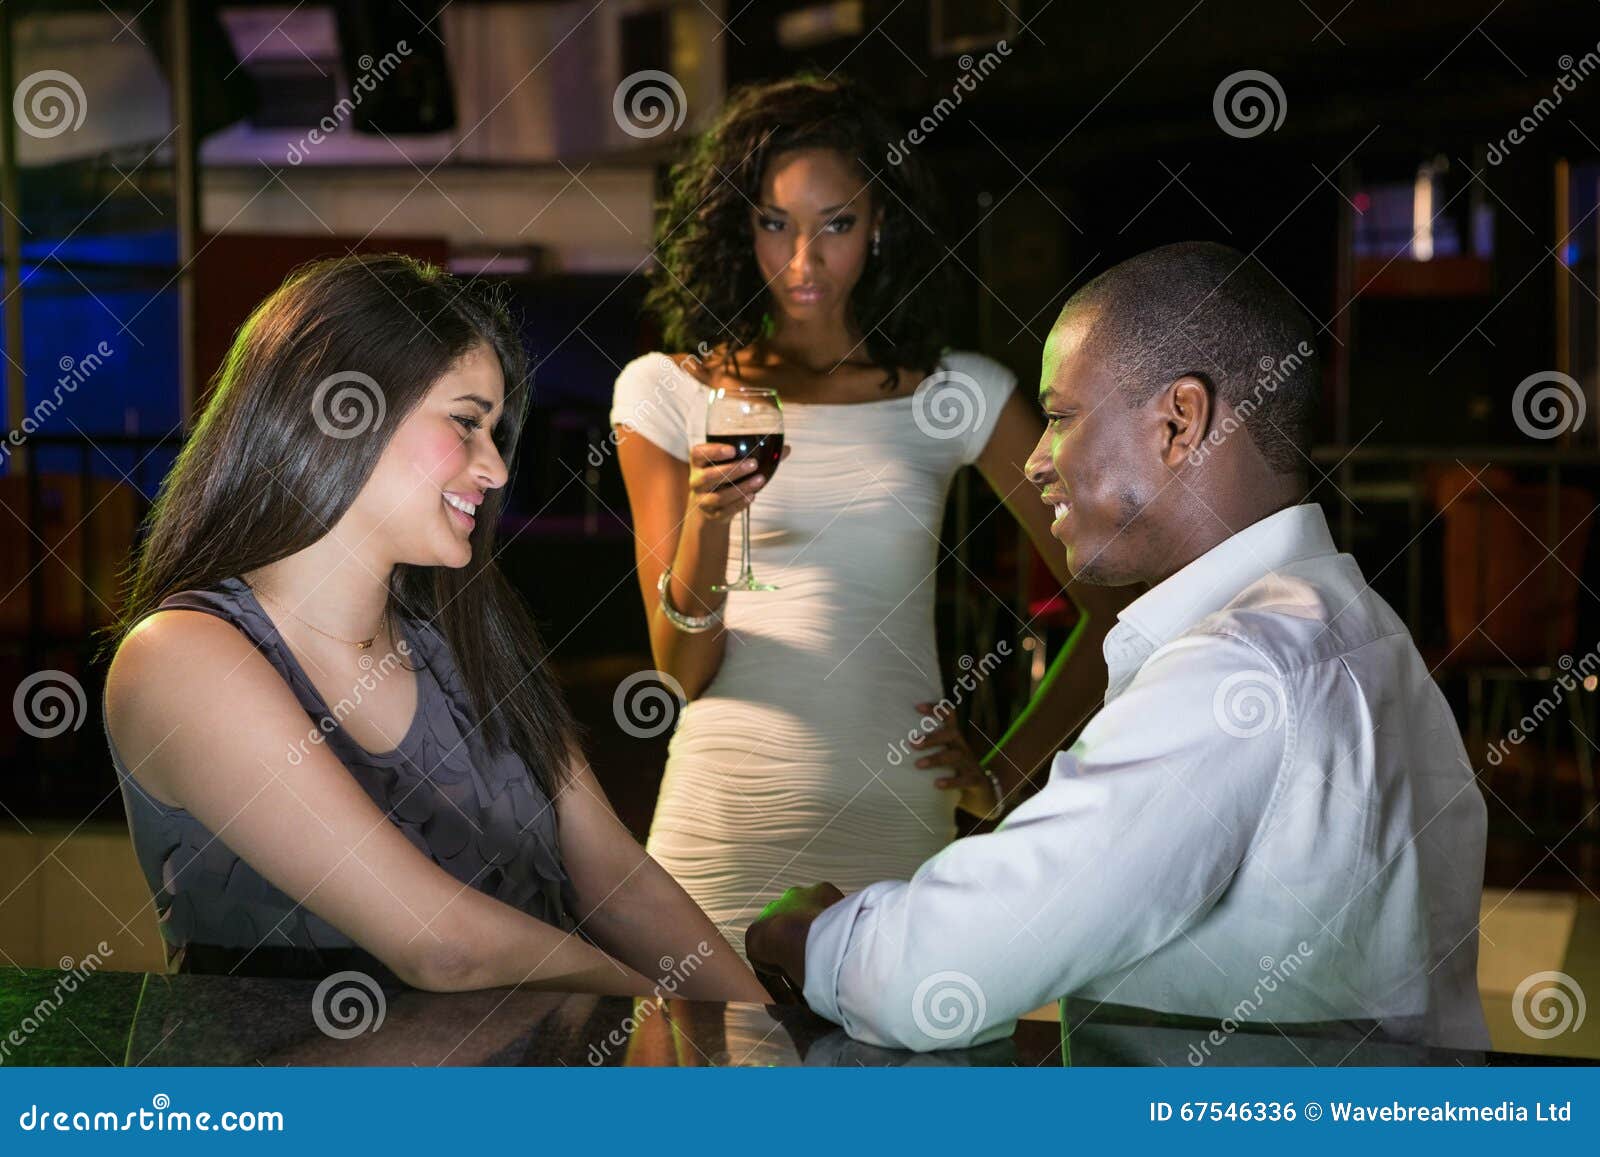 unhappy woman looking at a couple flirting near bar counter